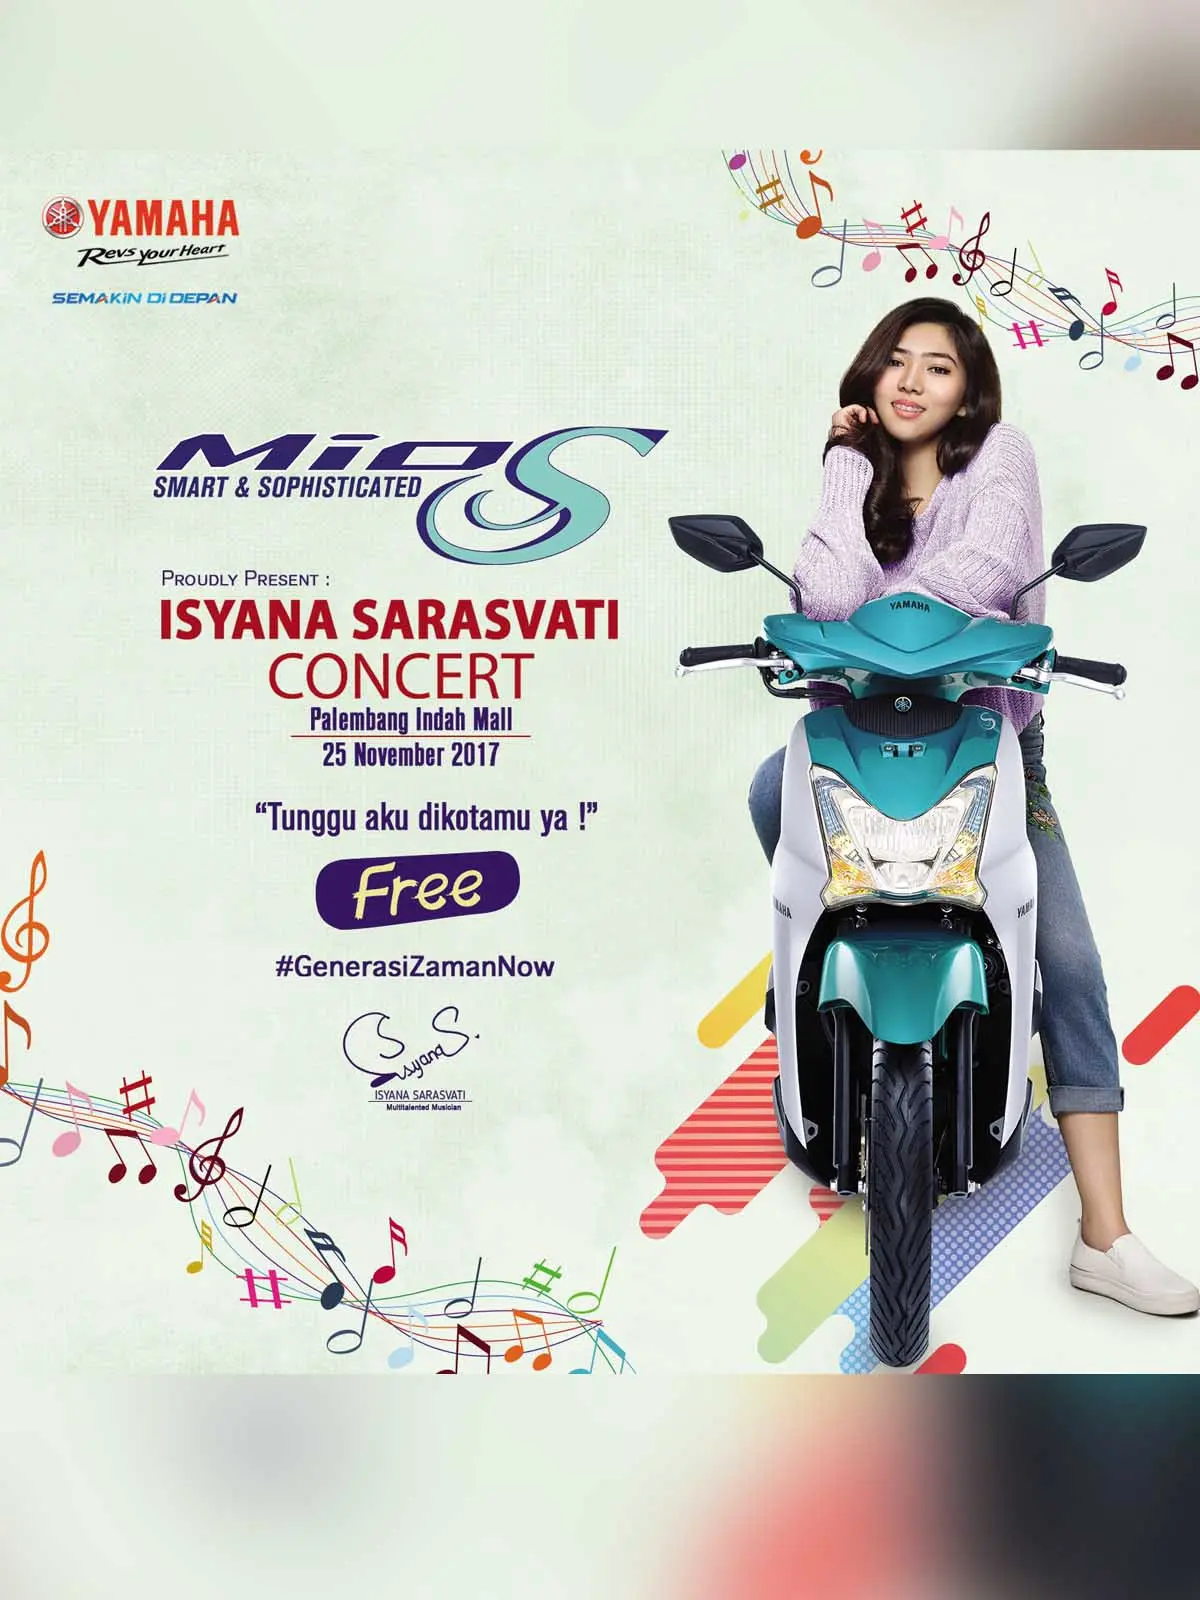 Mio S Roadshow Concert” featuring Isyana Sarasvati hadir di Palembang.